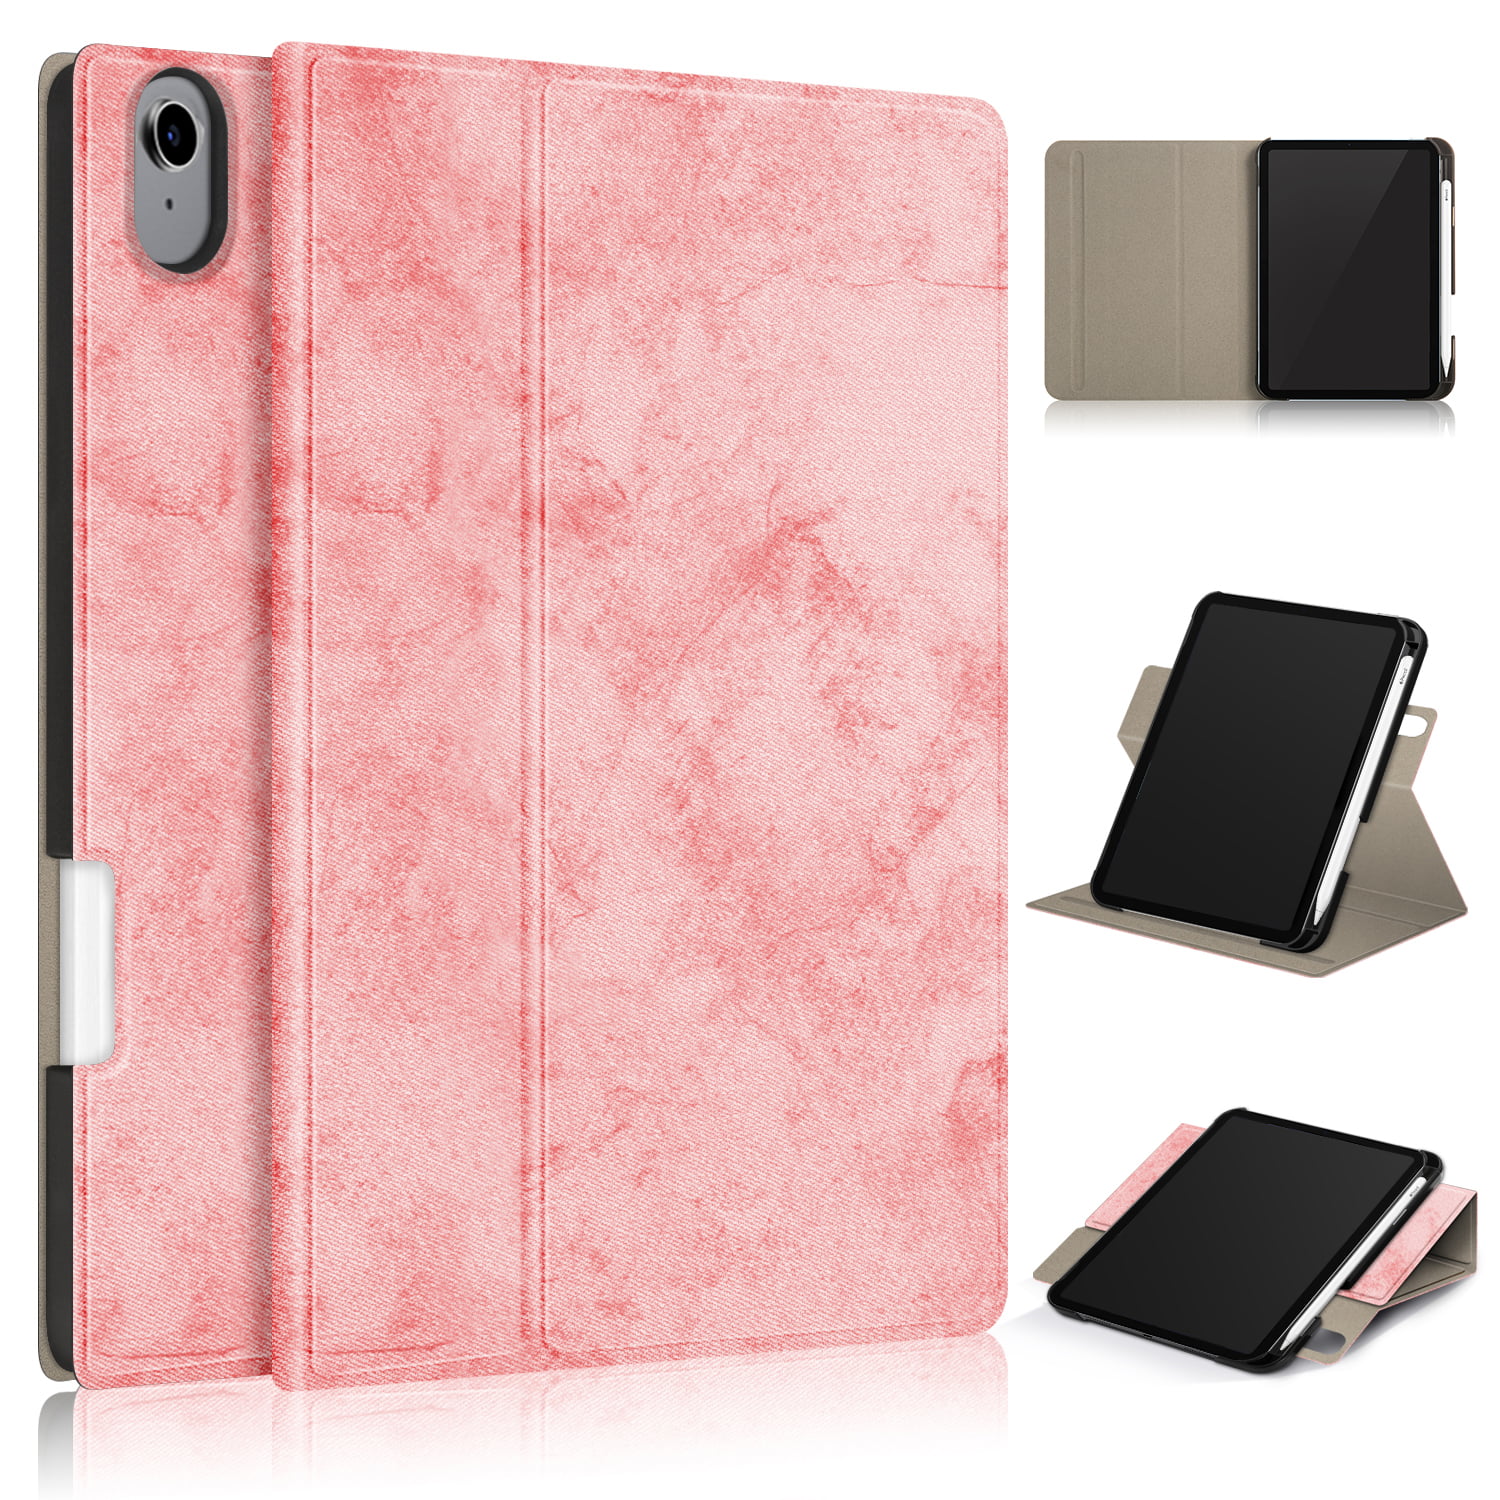 Folio PU Leather Case with Pencil Holder/Tri-fold Stand/Auto Sleep&Wake/Card Slot Black Full Body Sturdy iPad Mini 2021 Case A2567 A2568 A2569 SEYMCY Cover for iPad Mini 6 8.3 inch 2021